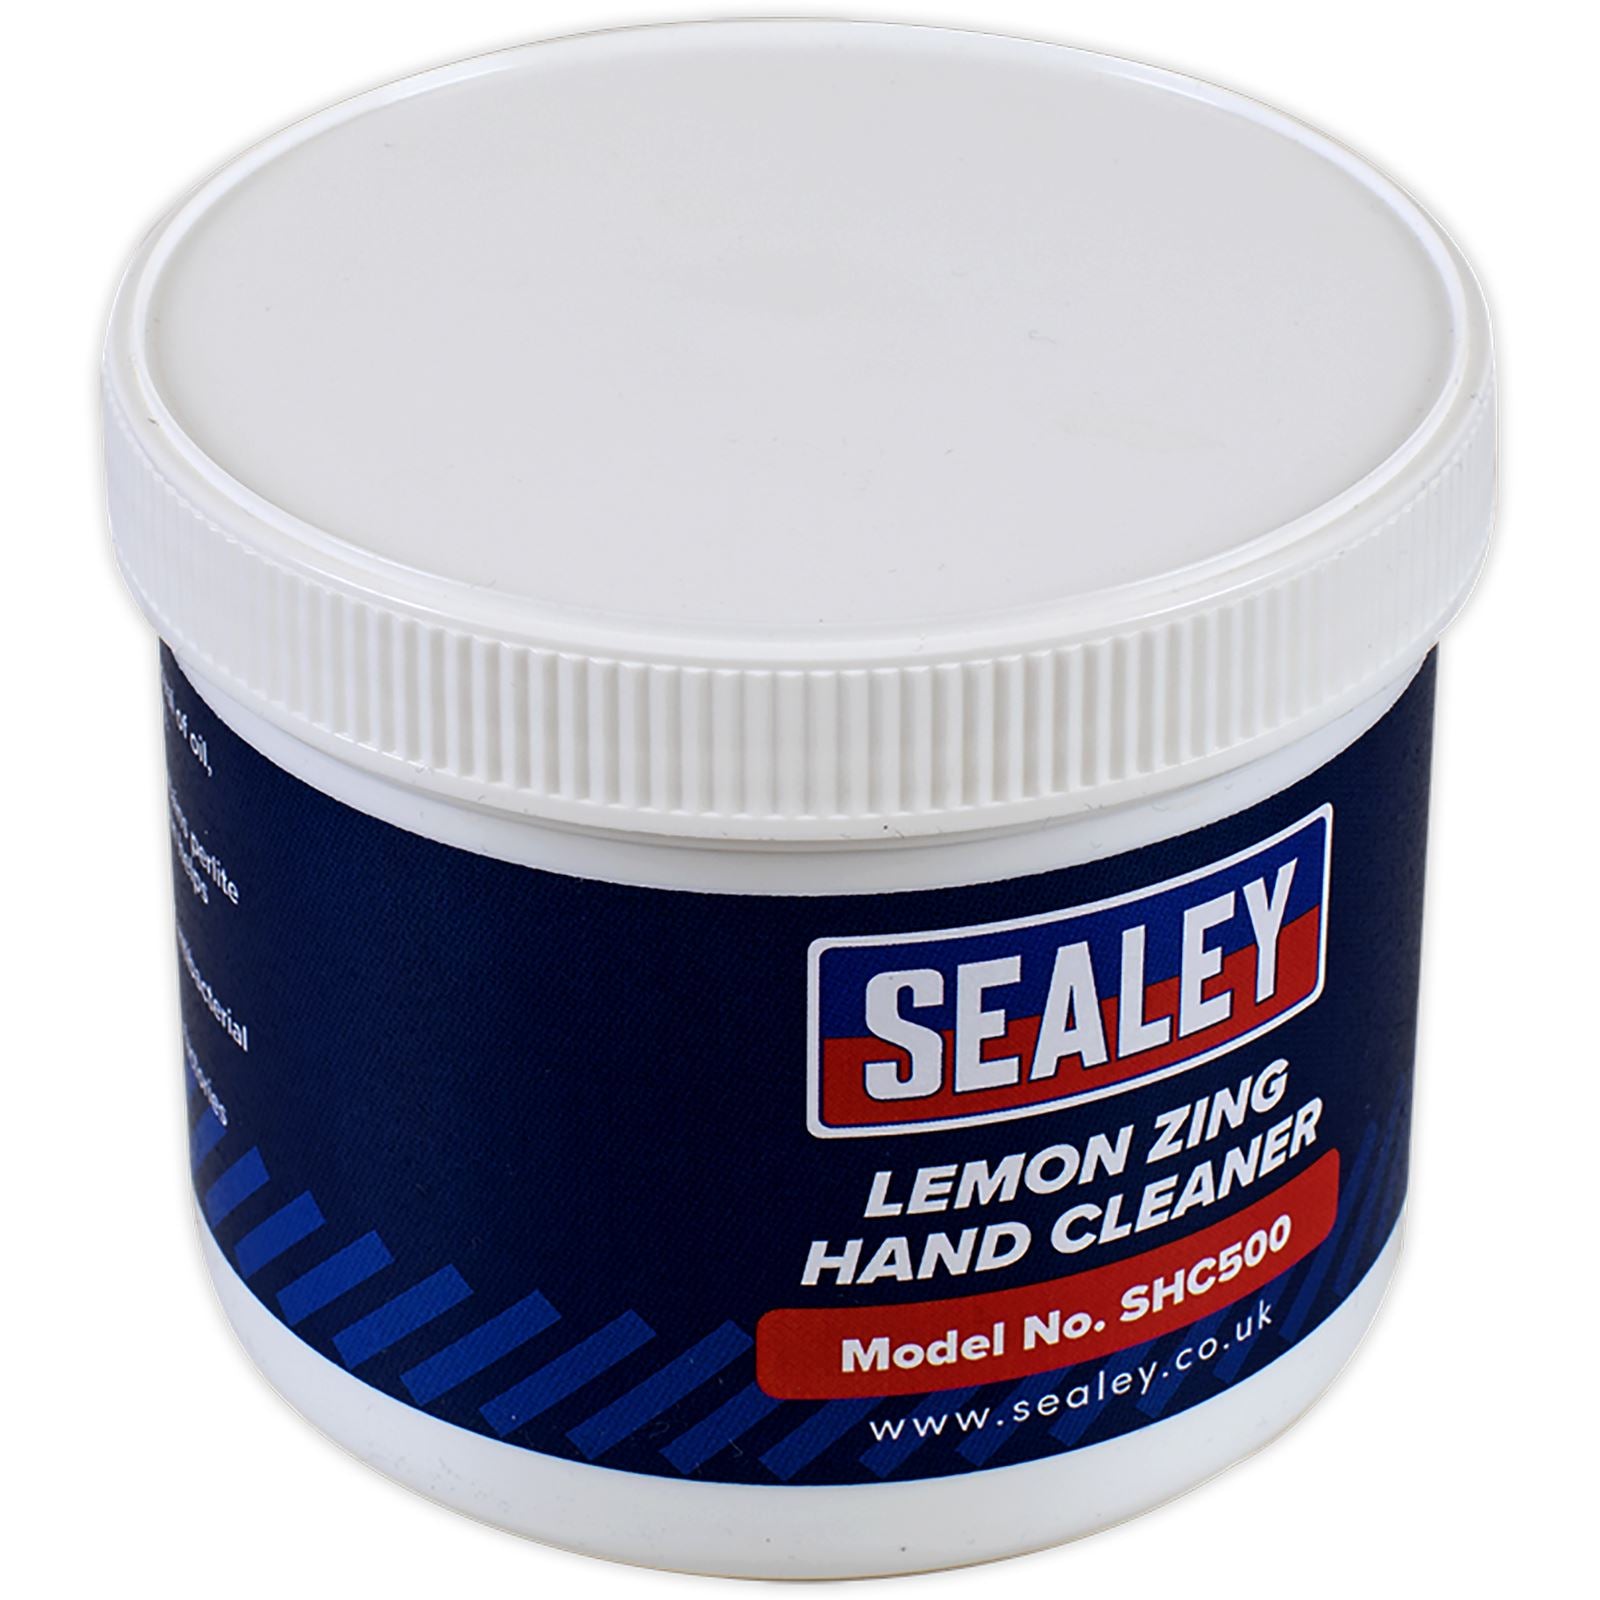 Sealey Hand Cleaner 500ml Lemon Zing